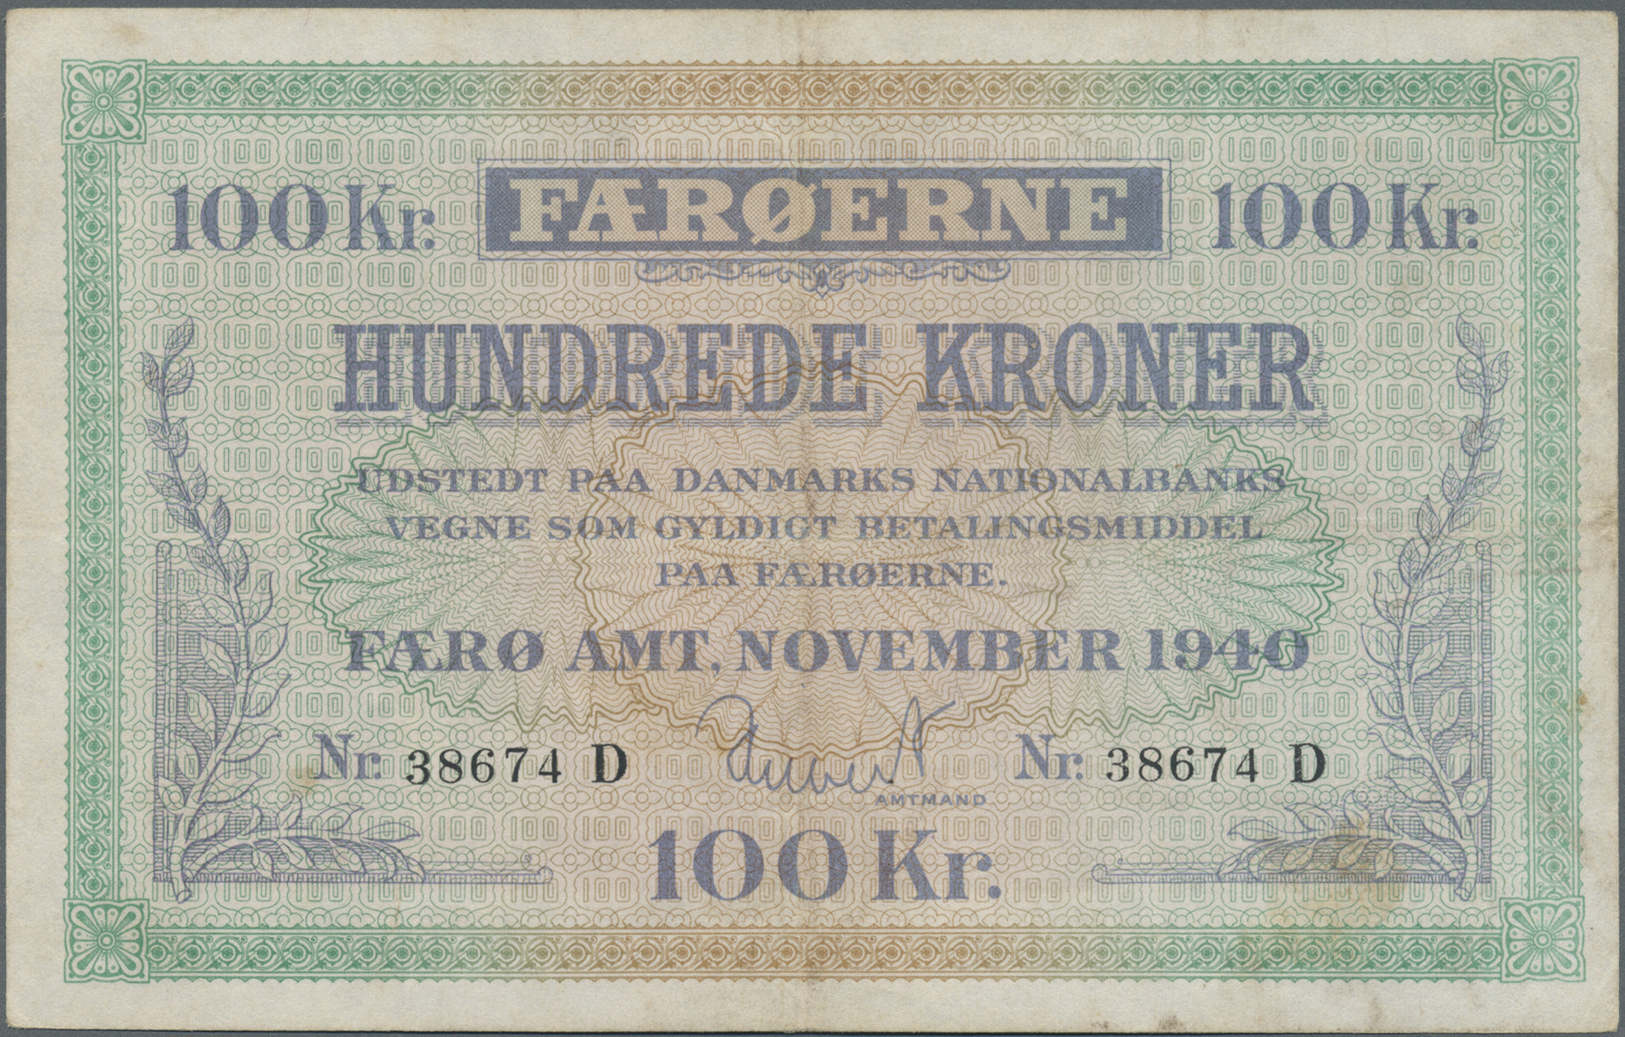 00742 Faeroe Islands / Färöer: 100 Kroner 1940 P. 12a, Rare Note, Used With Light Folds, No Holes Or Tears, No Repairs, - Faroe Islands